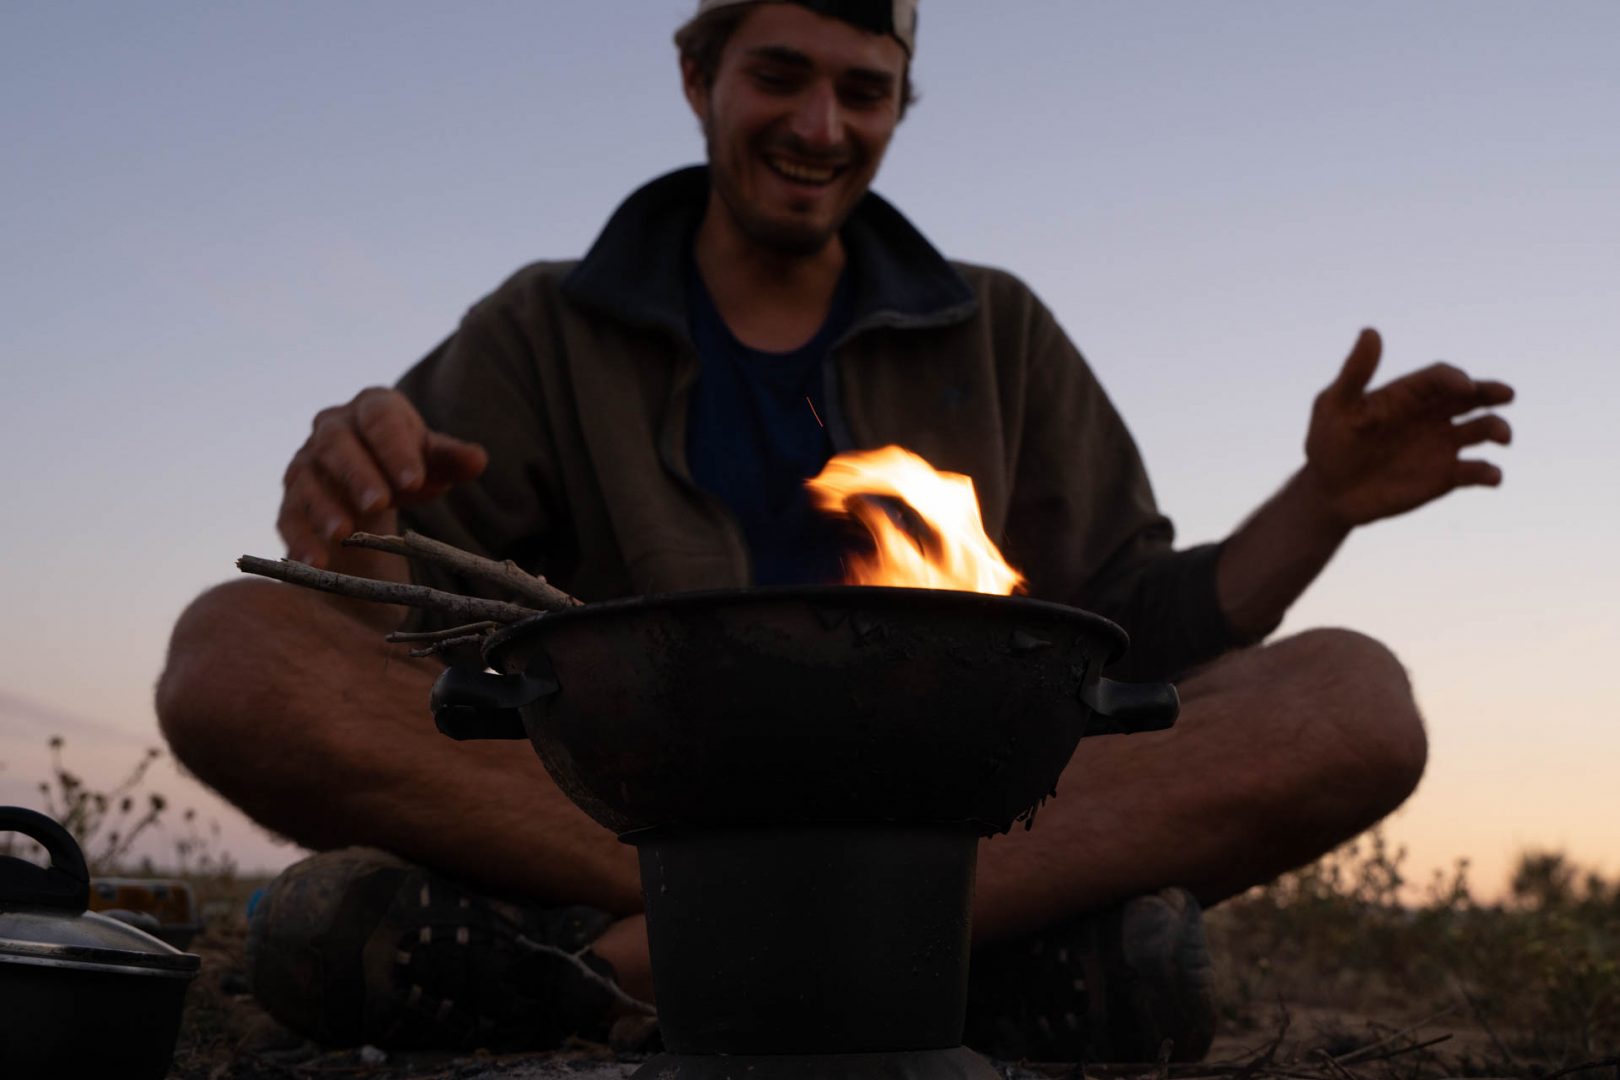 jascha polenz outdoor photography lifestyle fotografie heroshot sponsoring campfire outdoorcooking outdoorküche